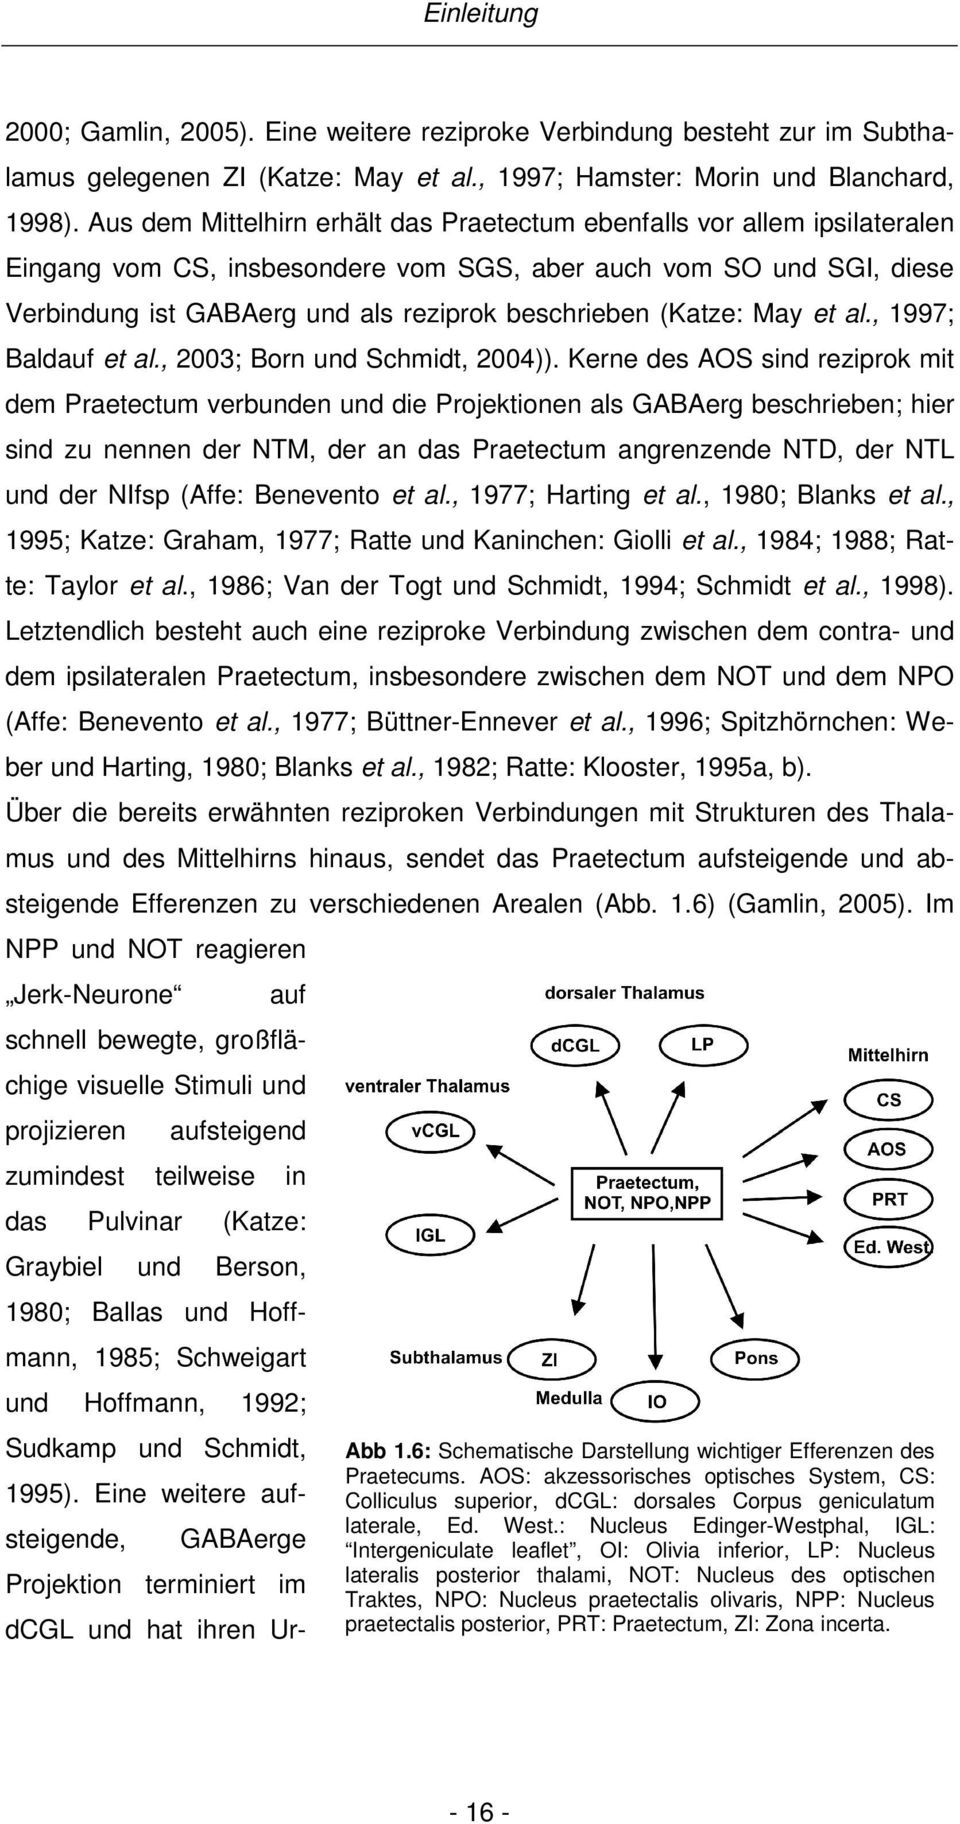 (Katze: May et al., 1997; Baldauf et al., 2003; Born und Schmidt, 2004)).